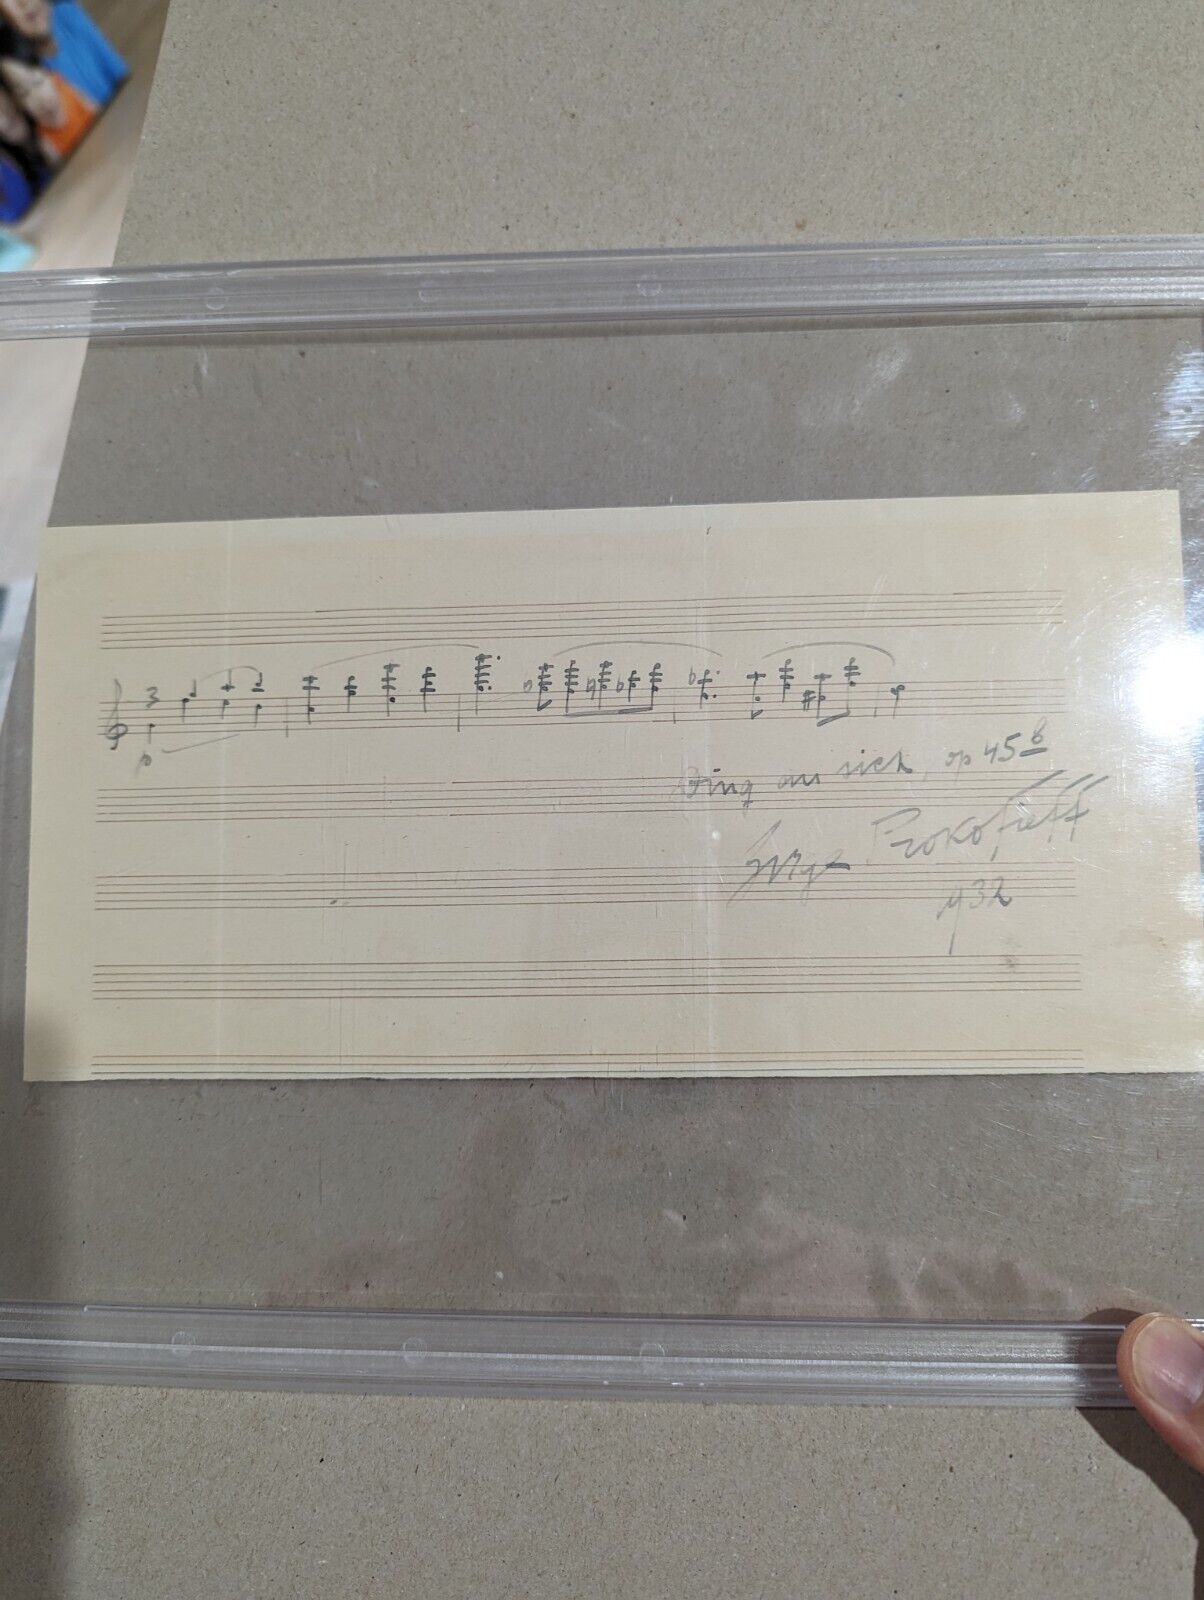 Sergei Prokofiev Autograph musical quotation signed. PSA/DNA encapsulated.